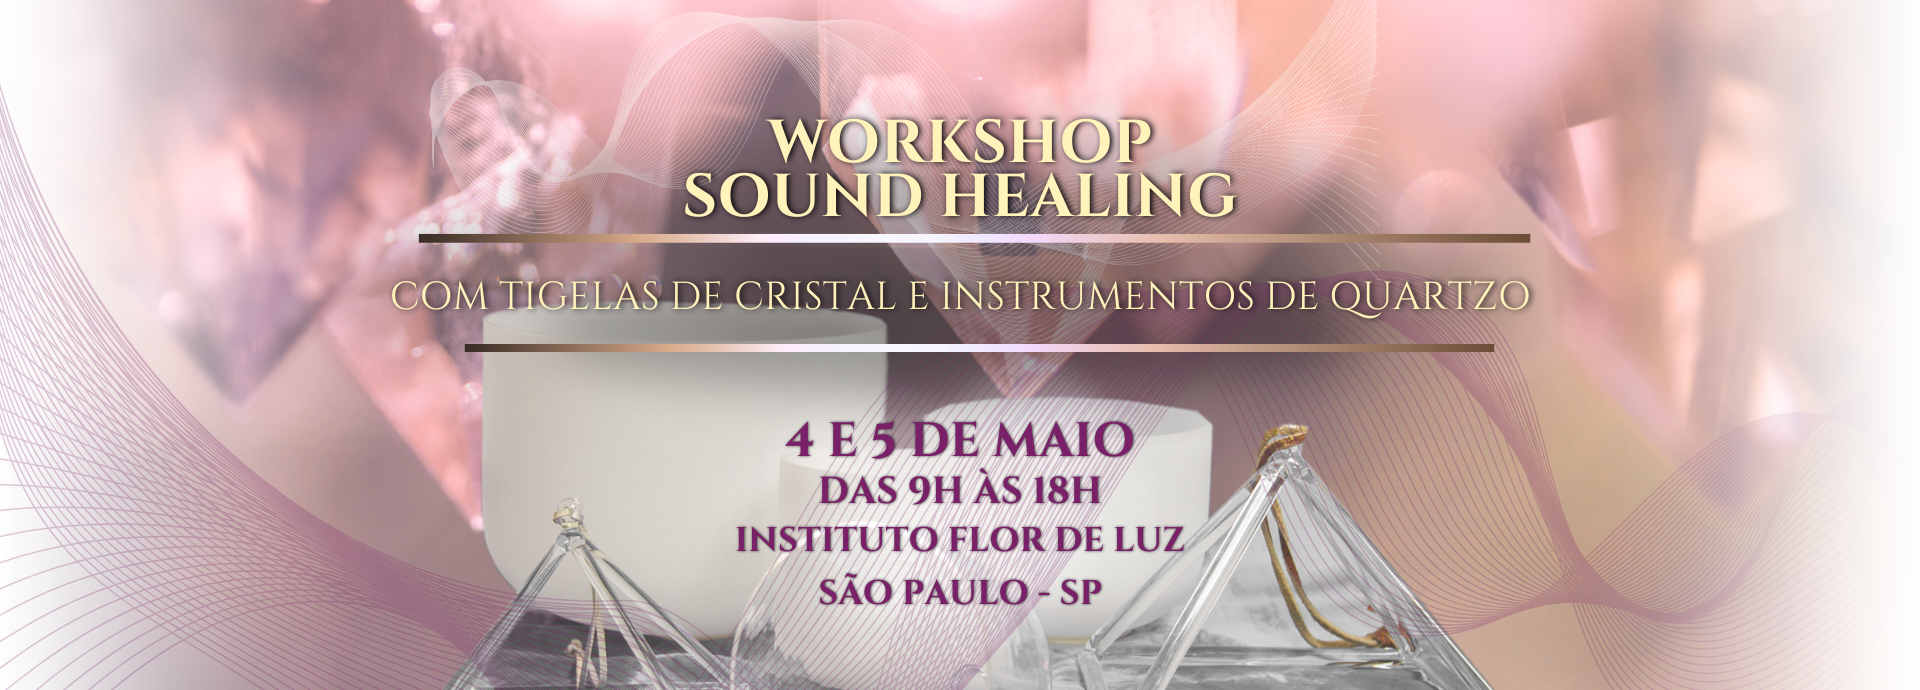 Workshop Sound Healing com Tigelas de Cristal